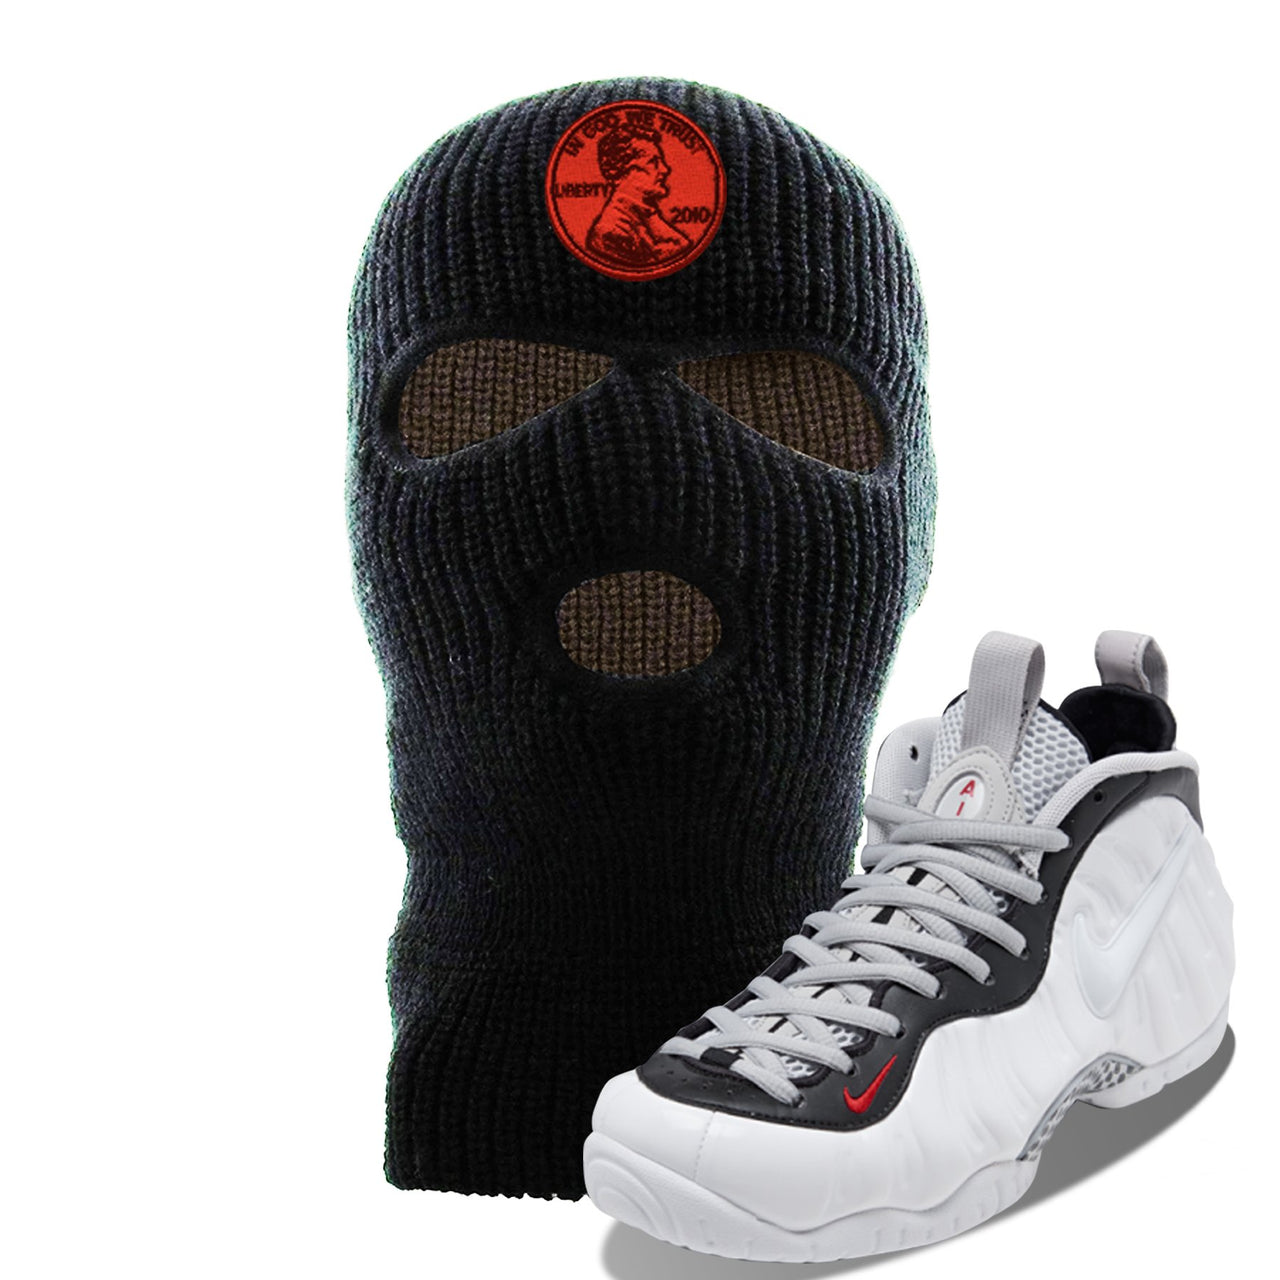 Foamposite Pro White Black University Red Sneaker Black Ski Mask | Winter Mask to match Nike Air Foamposite Pro White Black University Red Shoes | Penny